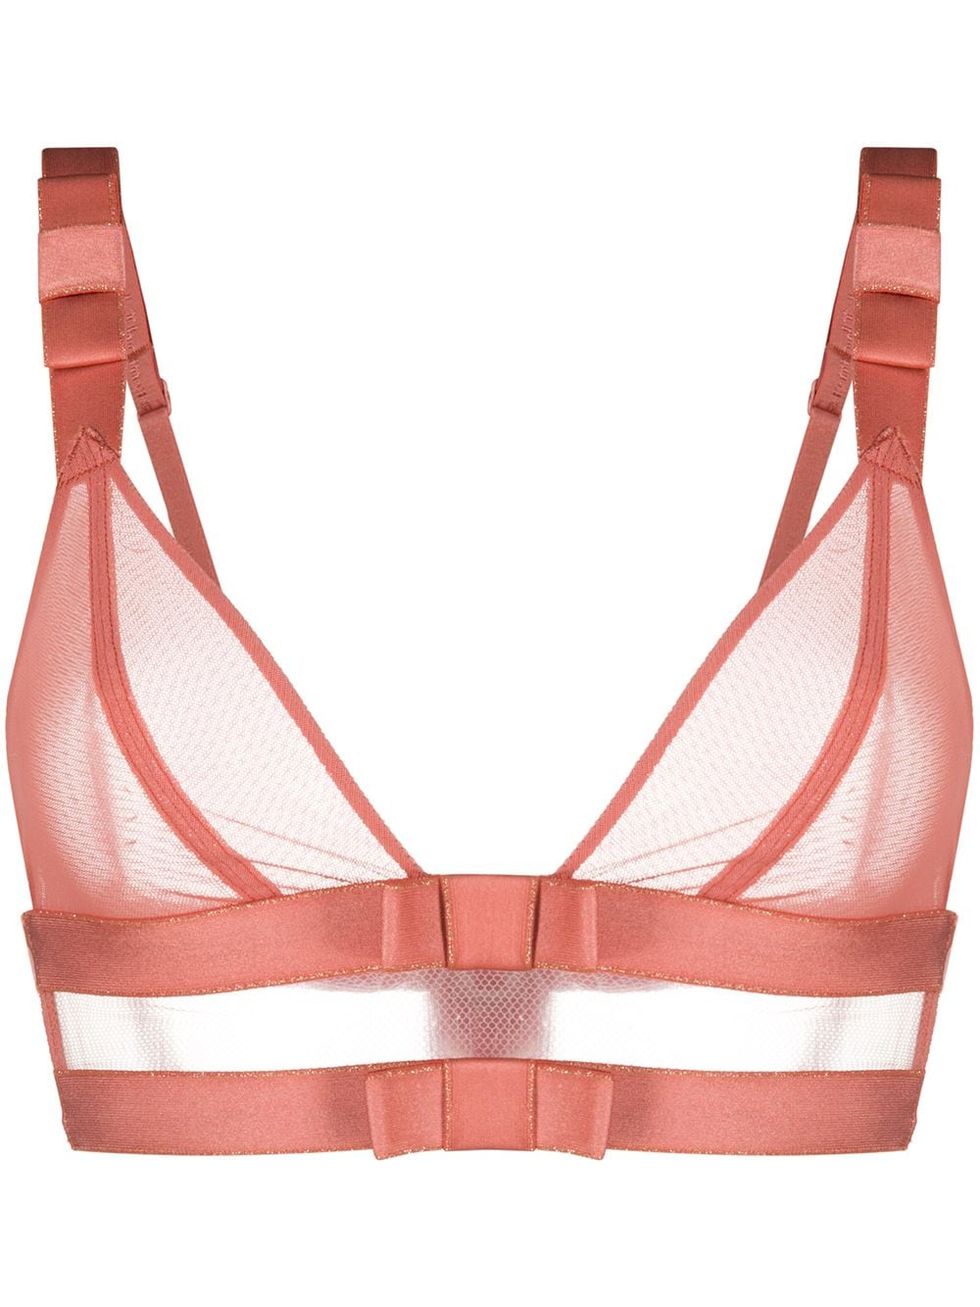 Chantal Thomass粉紅蕾絲胸罩